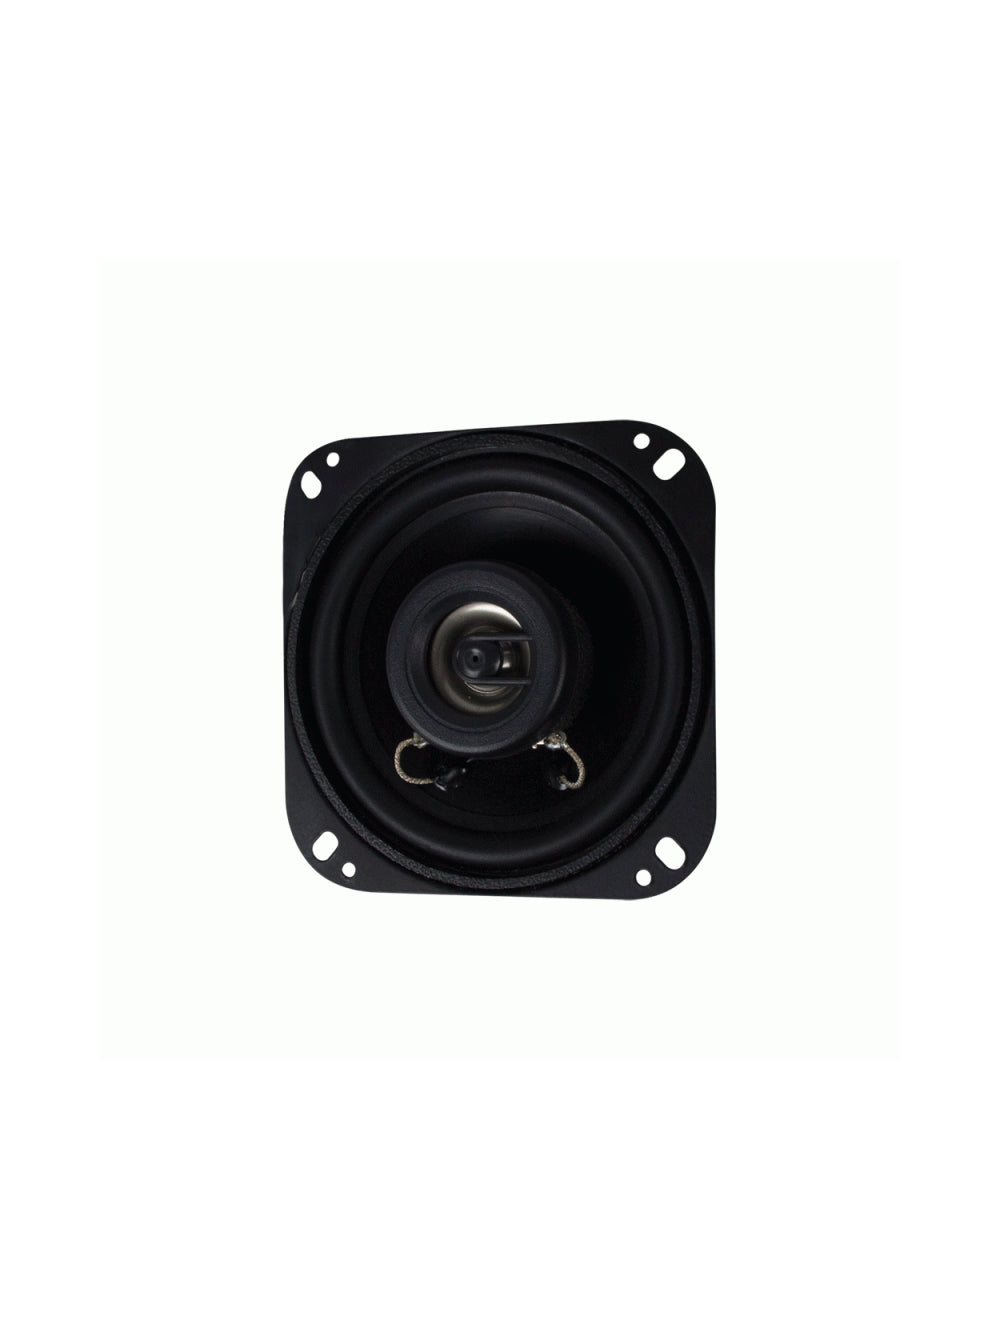 Installbay CX-400 4 Inch Coax Speakers - Pair